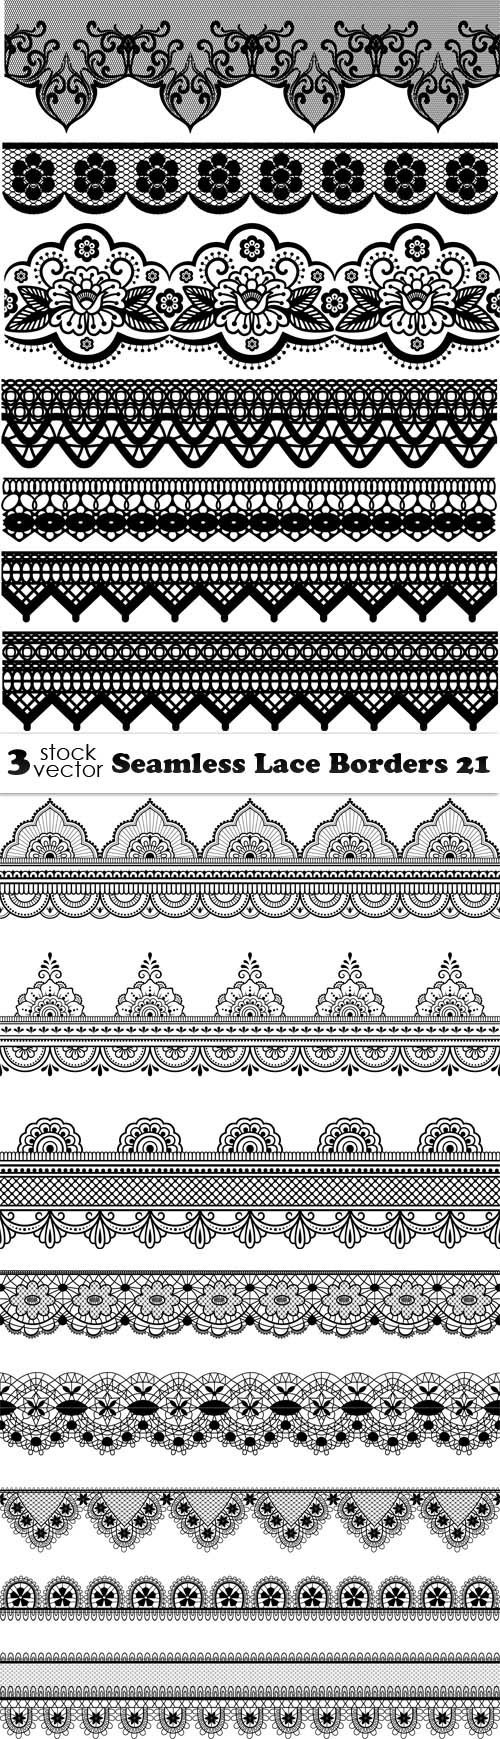 Vectors - Seamless Lace Borders 21